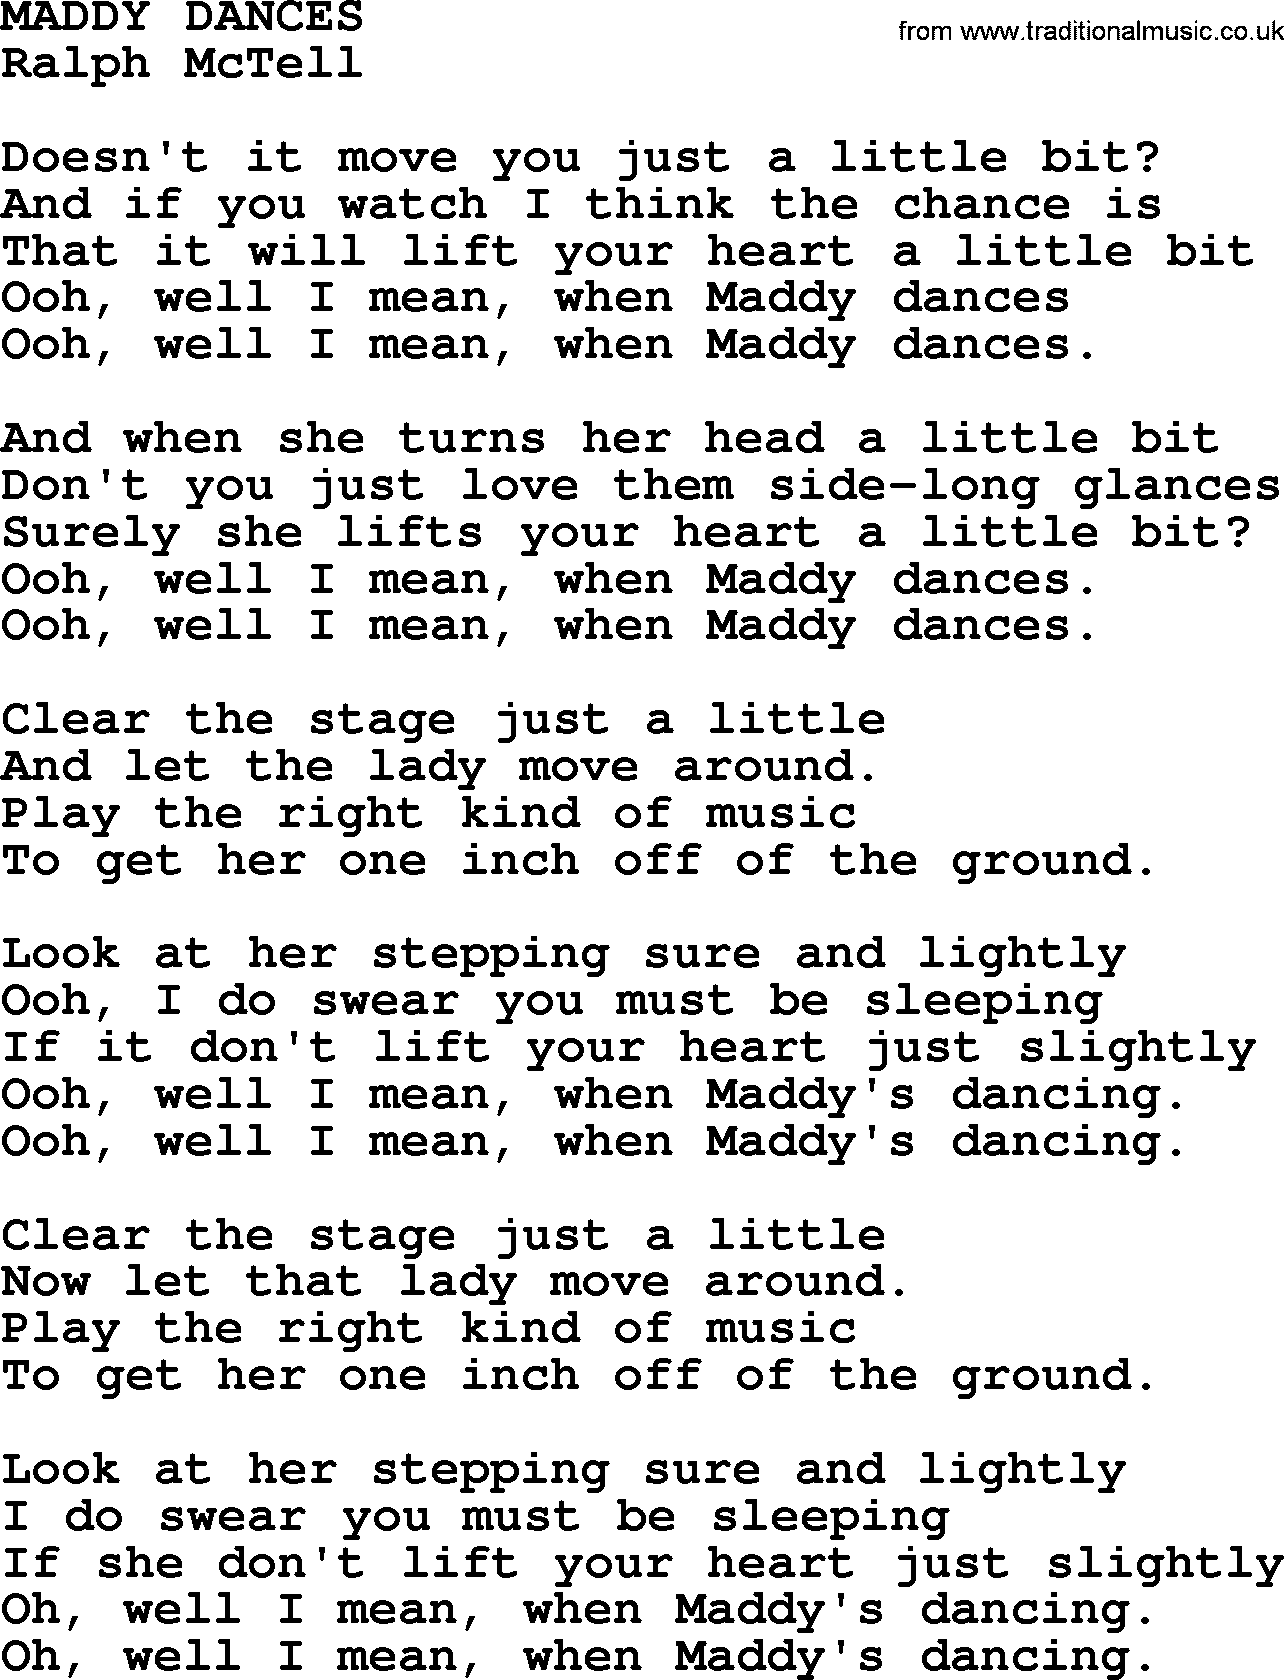 Ralph McTell Song: Maddy Dances, lyrics